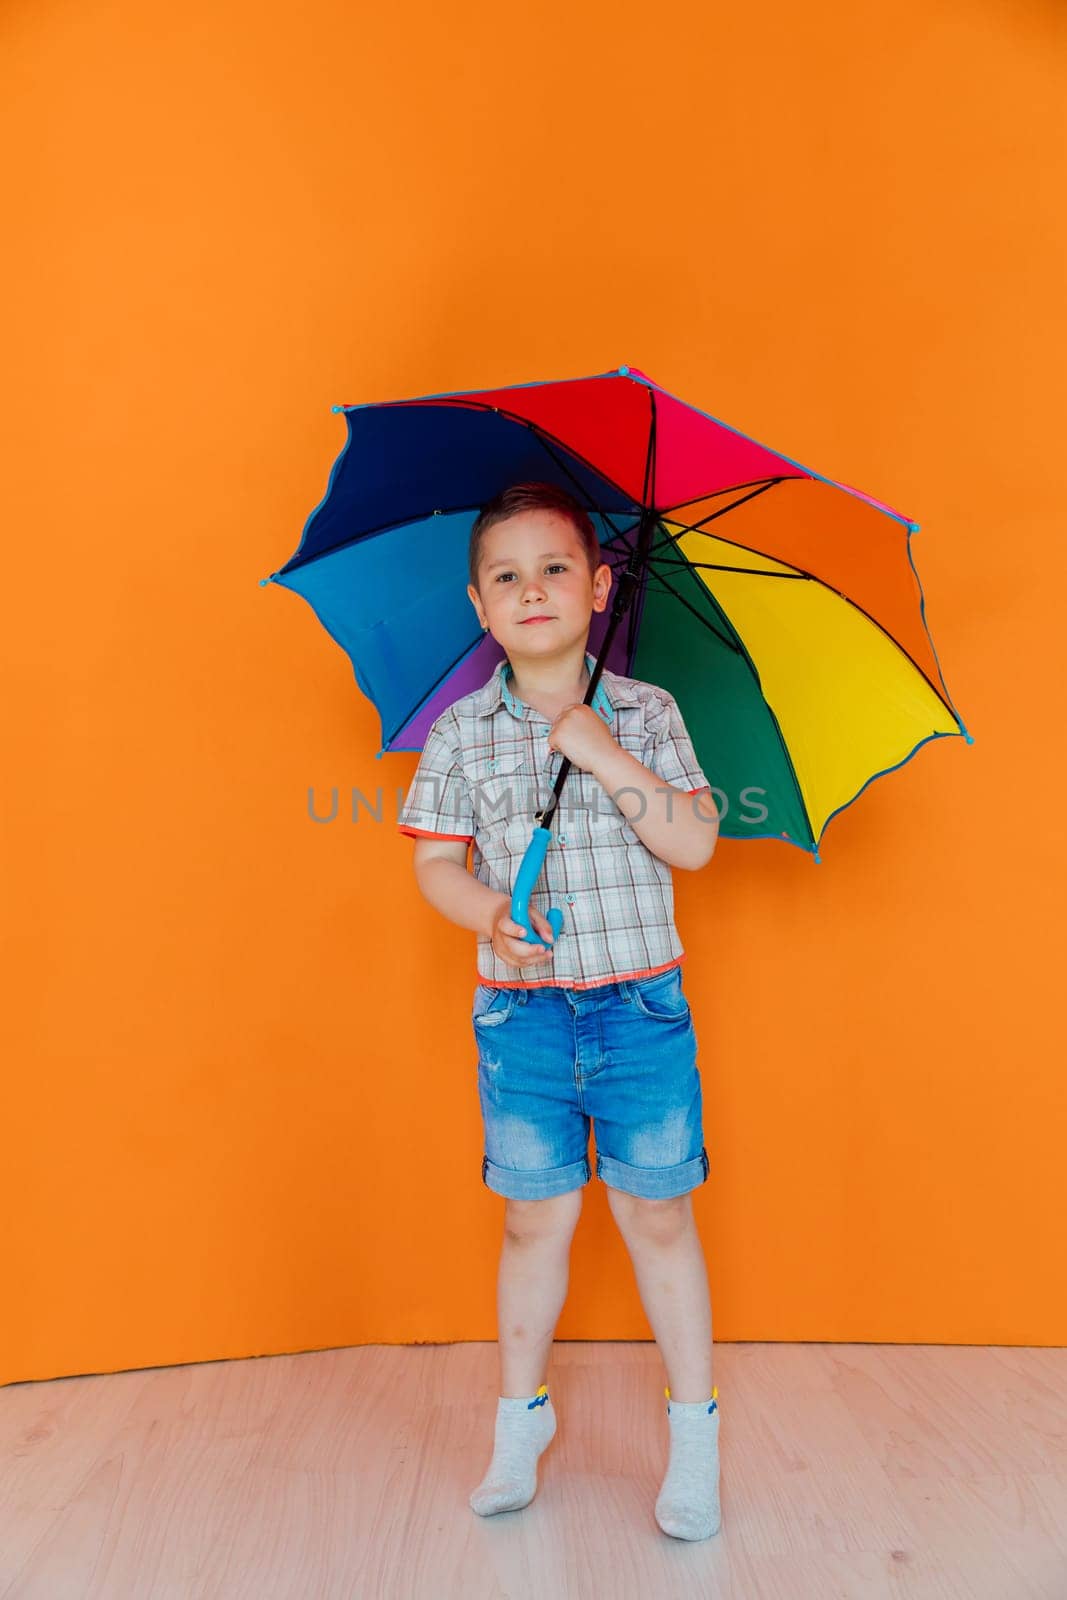 Boy standing under colorful rain umbrella on orange background by Simakov